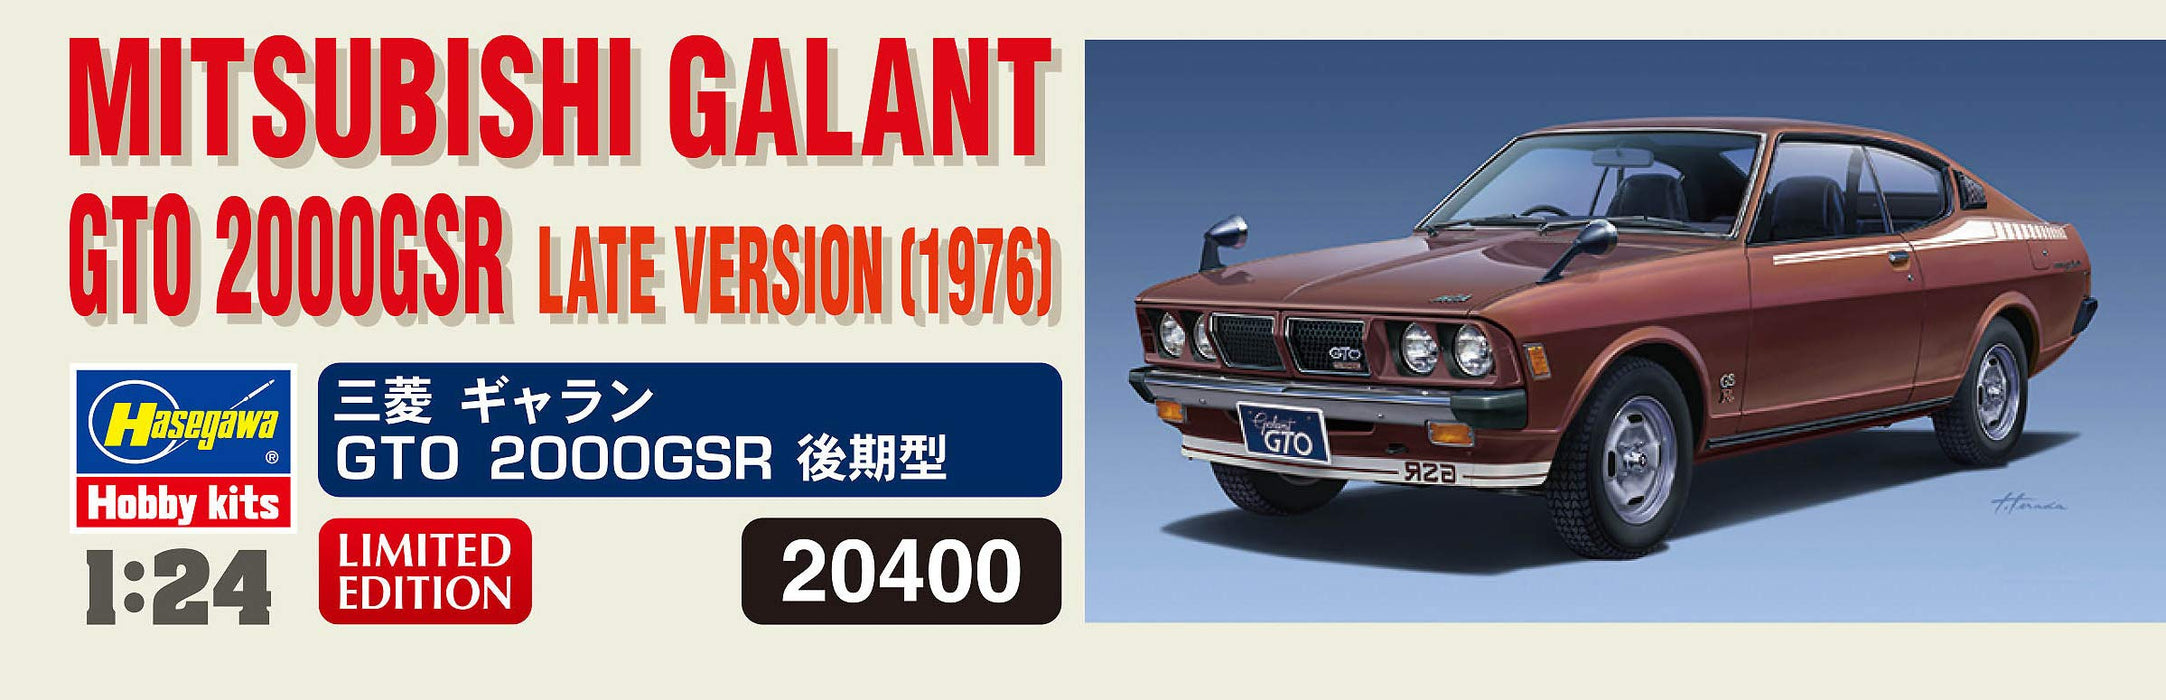 Hasegawa 20400 Mitsubishi Galant Gto 2000Gsr Late Type 1/24 Scale Car Model Kit